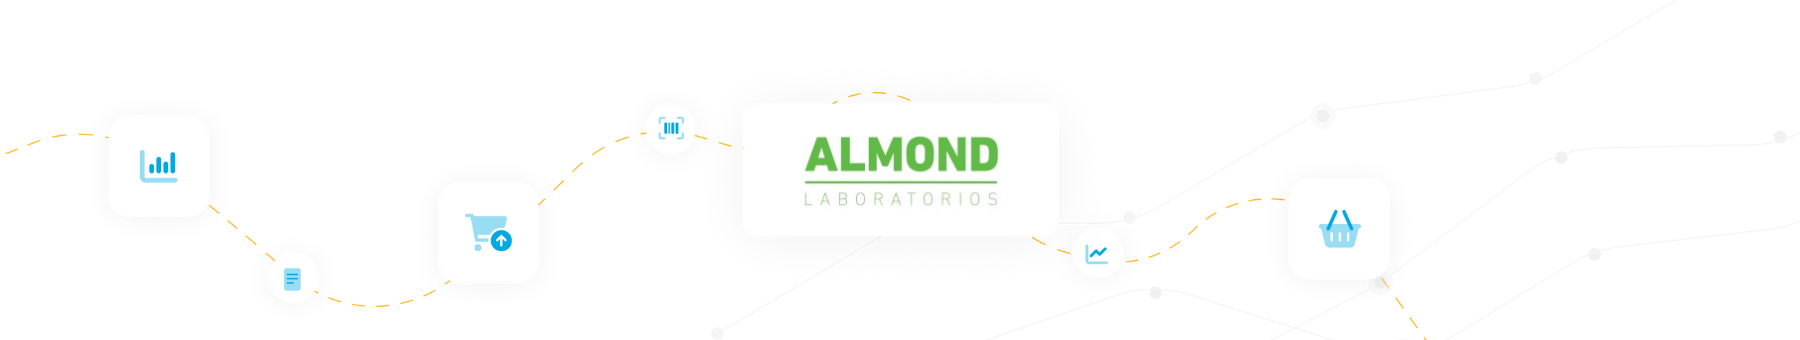 Case Study - Almond Laboratories